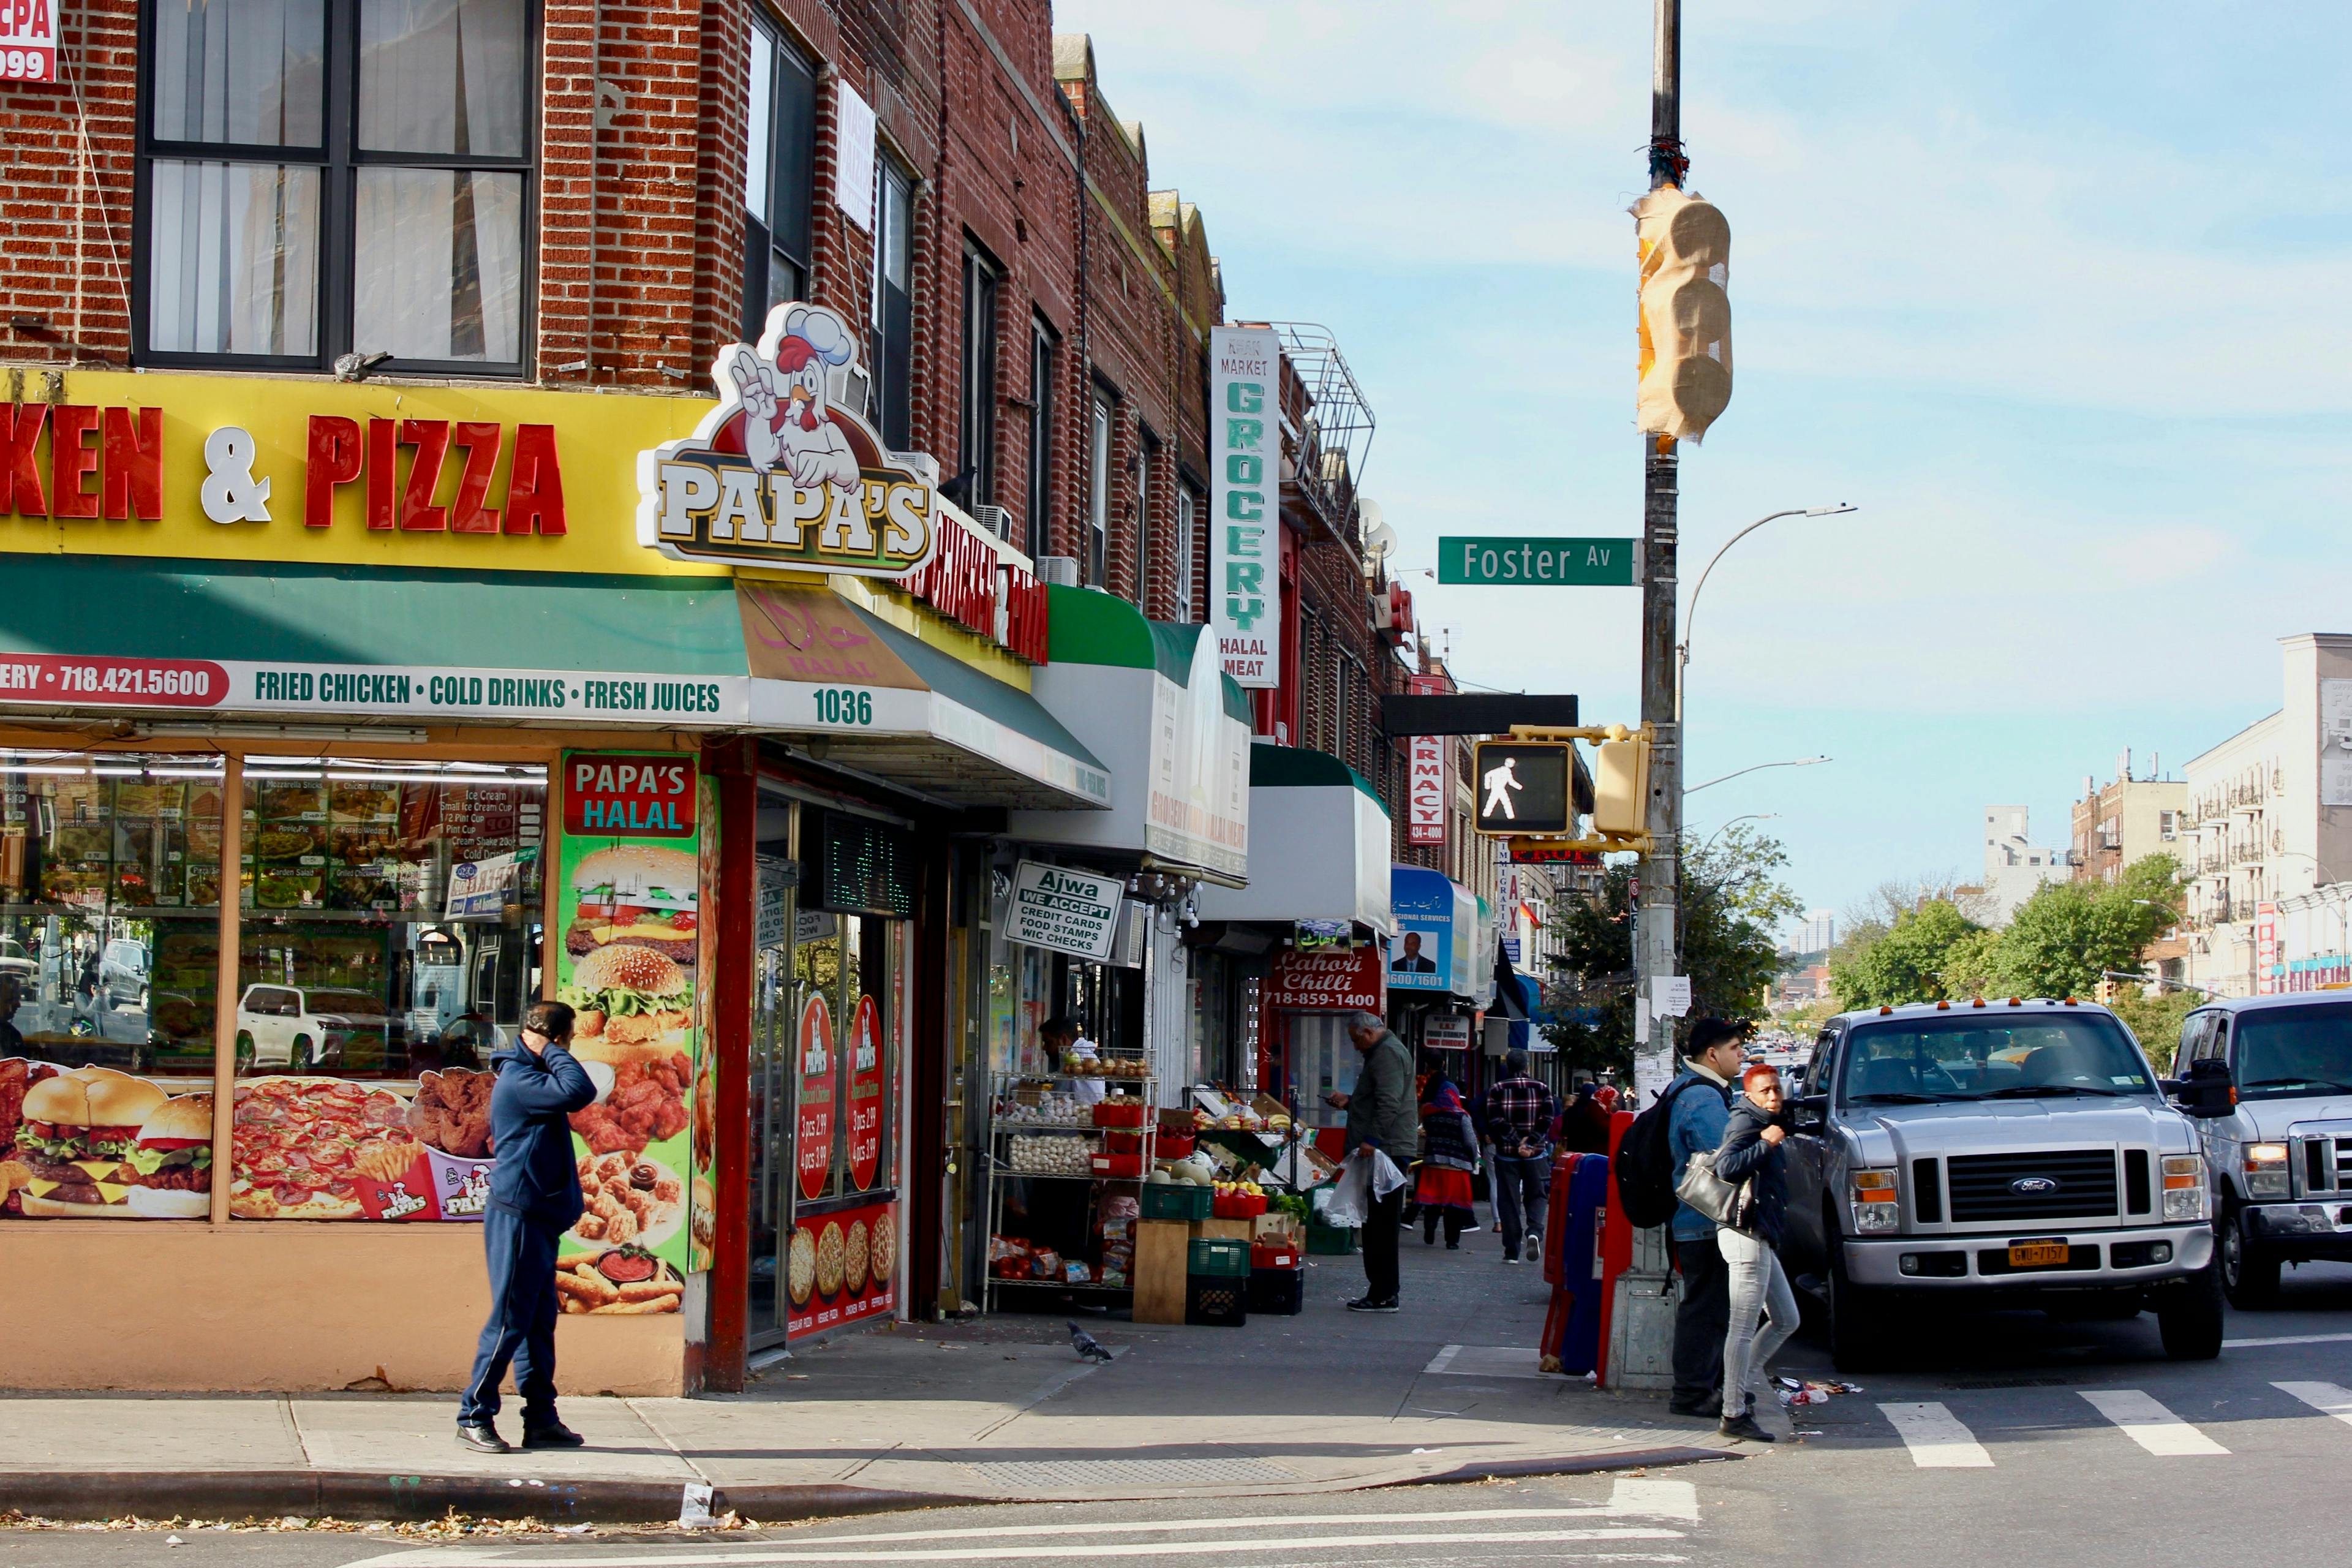 Little Pakistan runs along Coney Island Ave in Brooklyn. (Jeevika Verma)